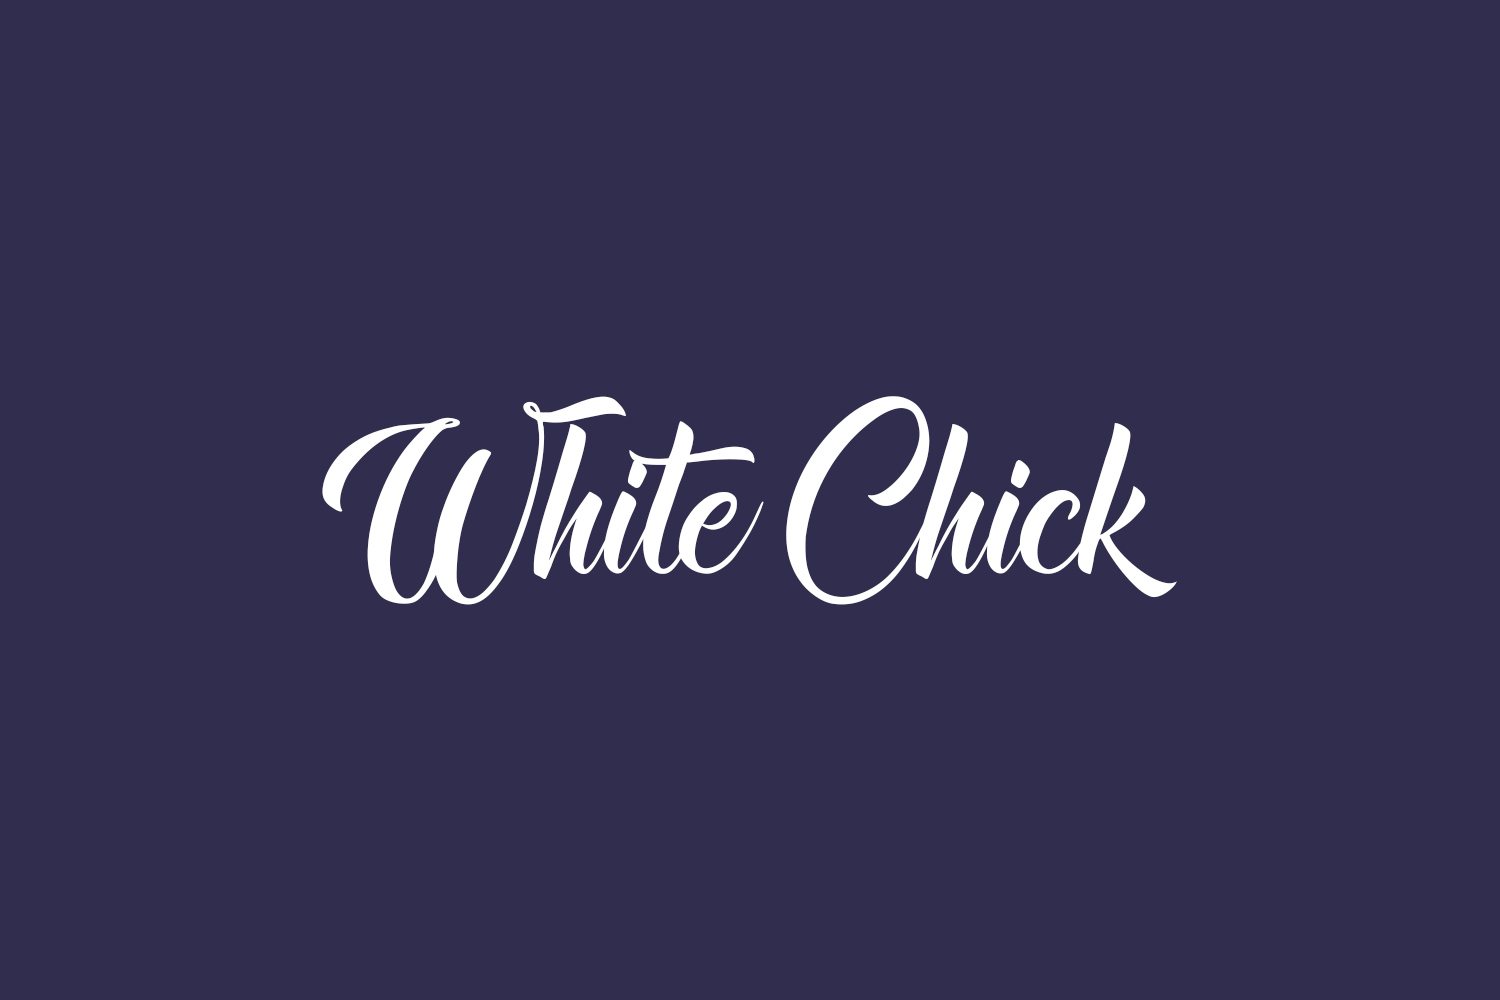 White Chick Free Font